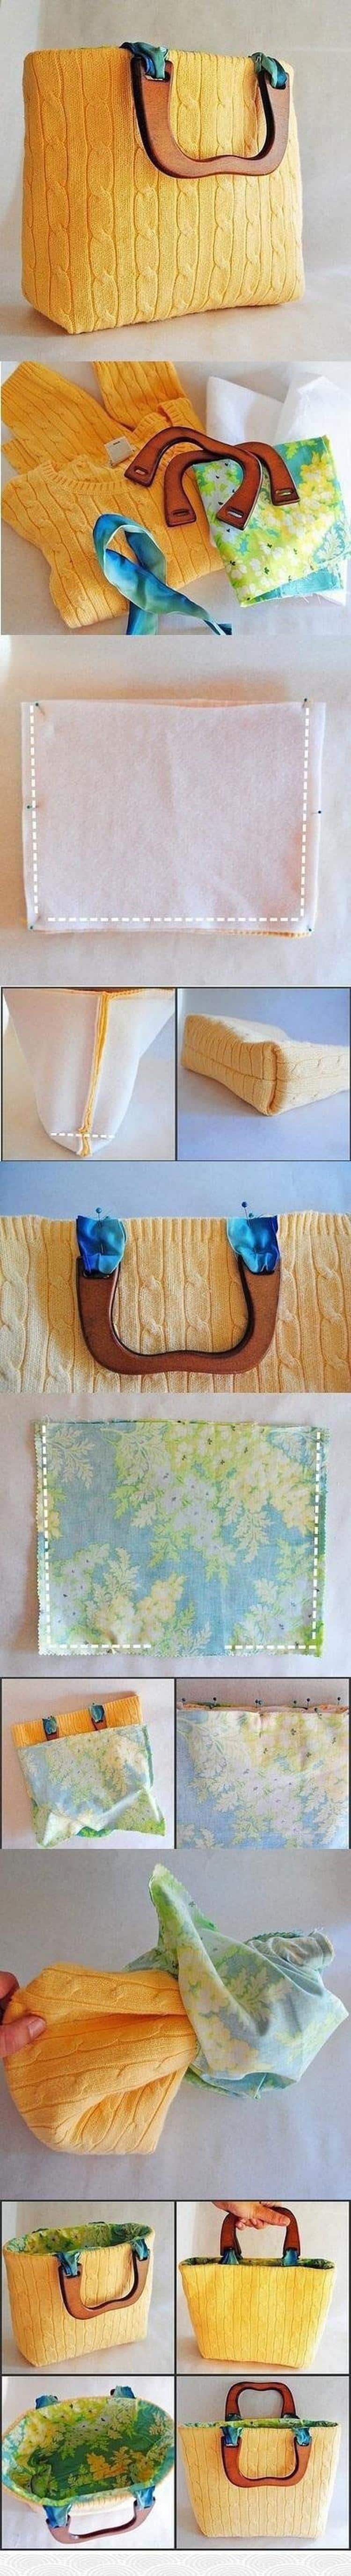 Creative DIY Handbag Tutorials You Must Try